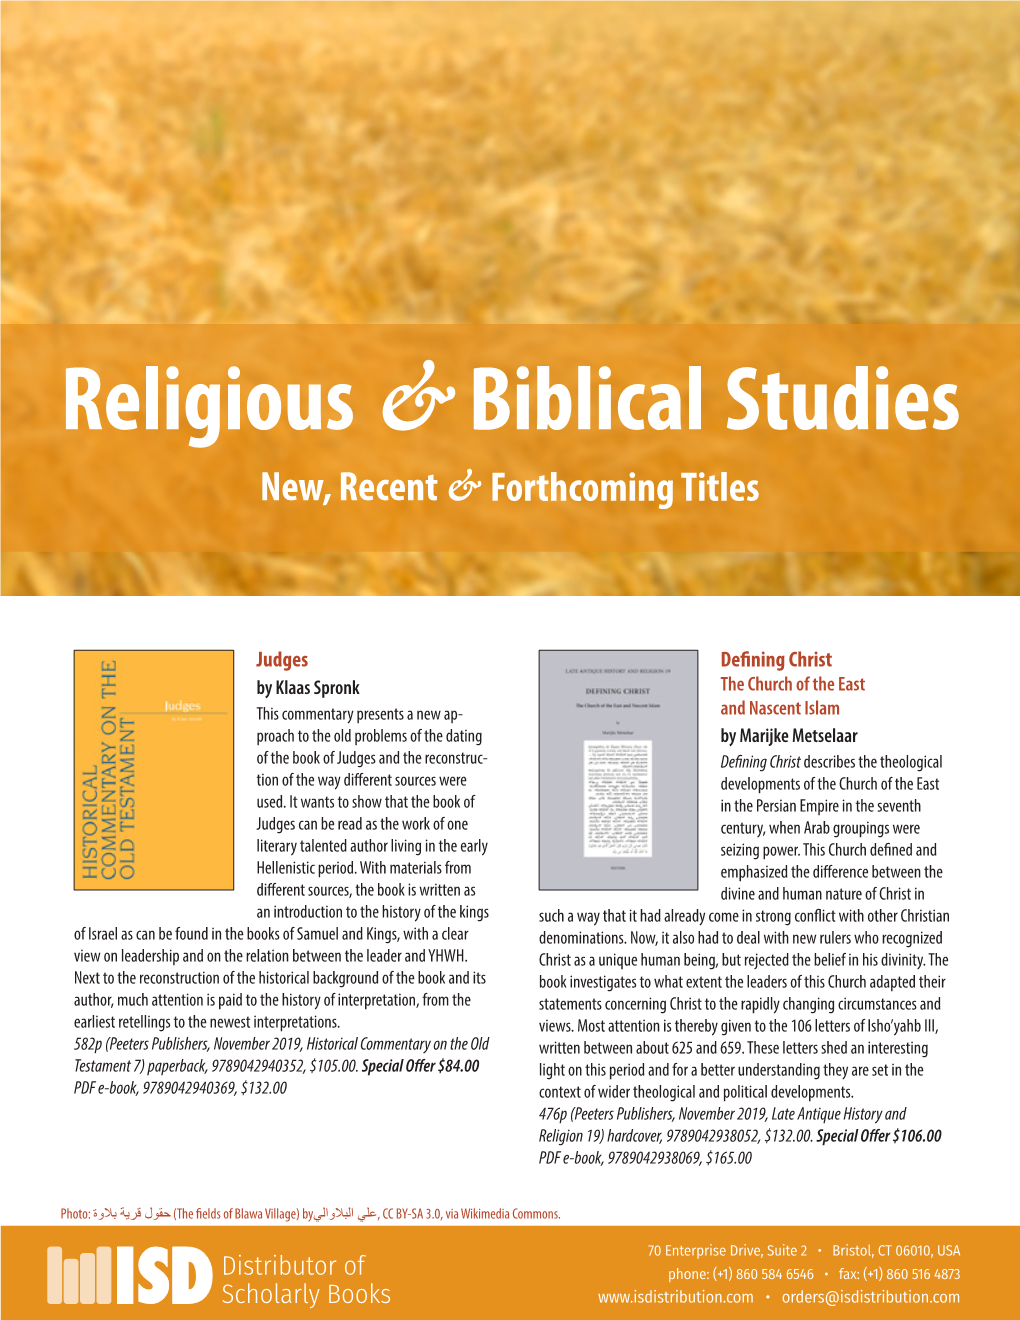 Religious & Biblical Studies